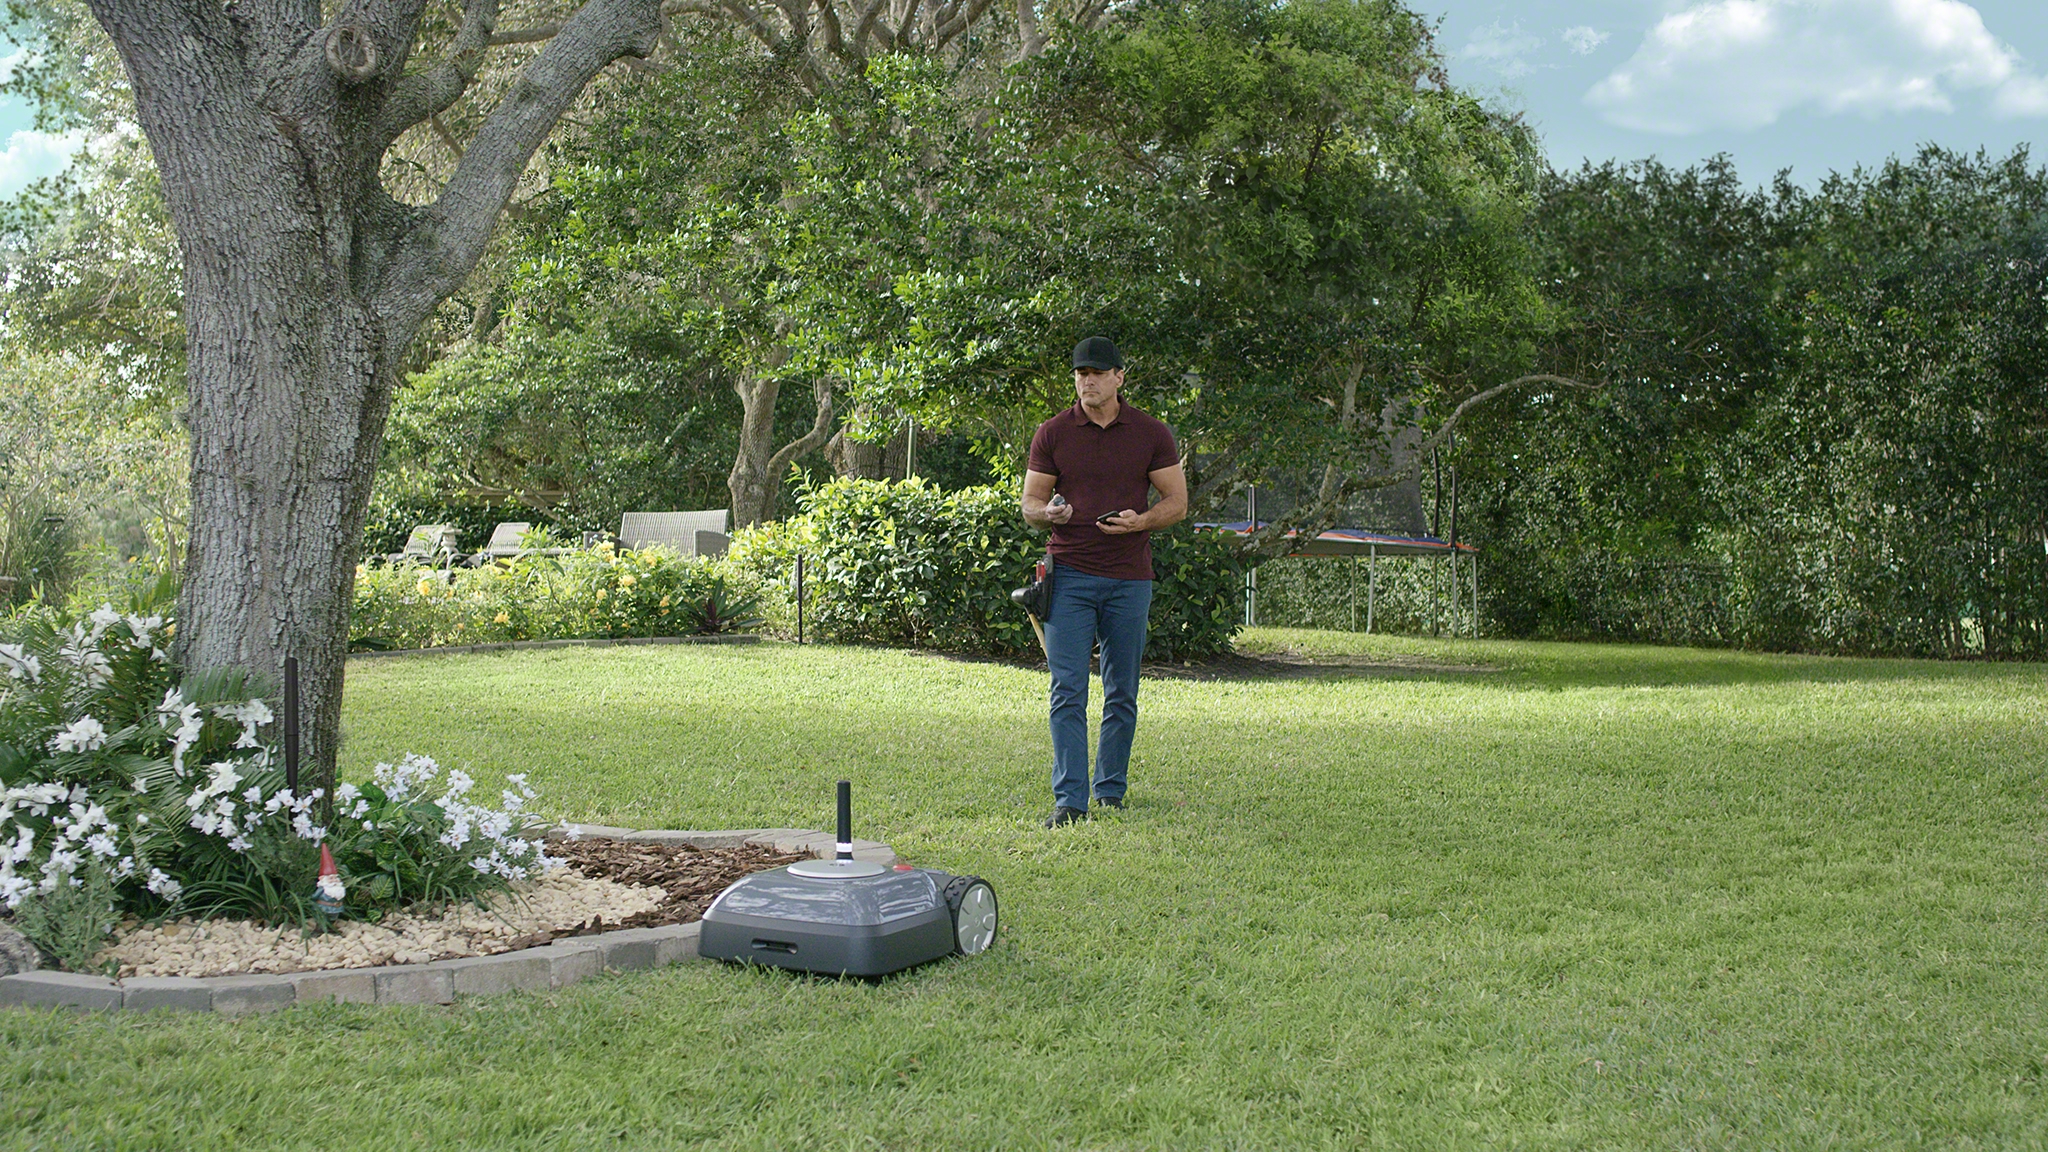 iRobot Terra Robotic Lawn Mower